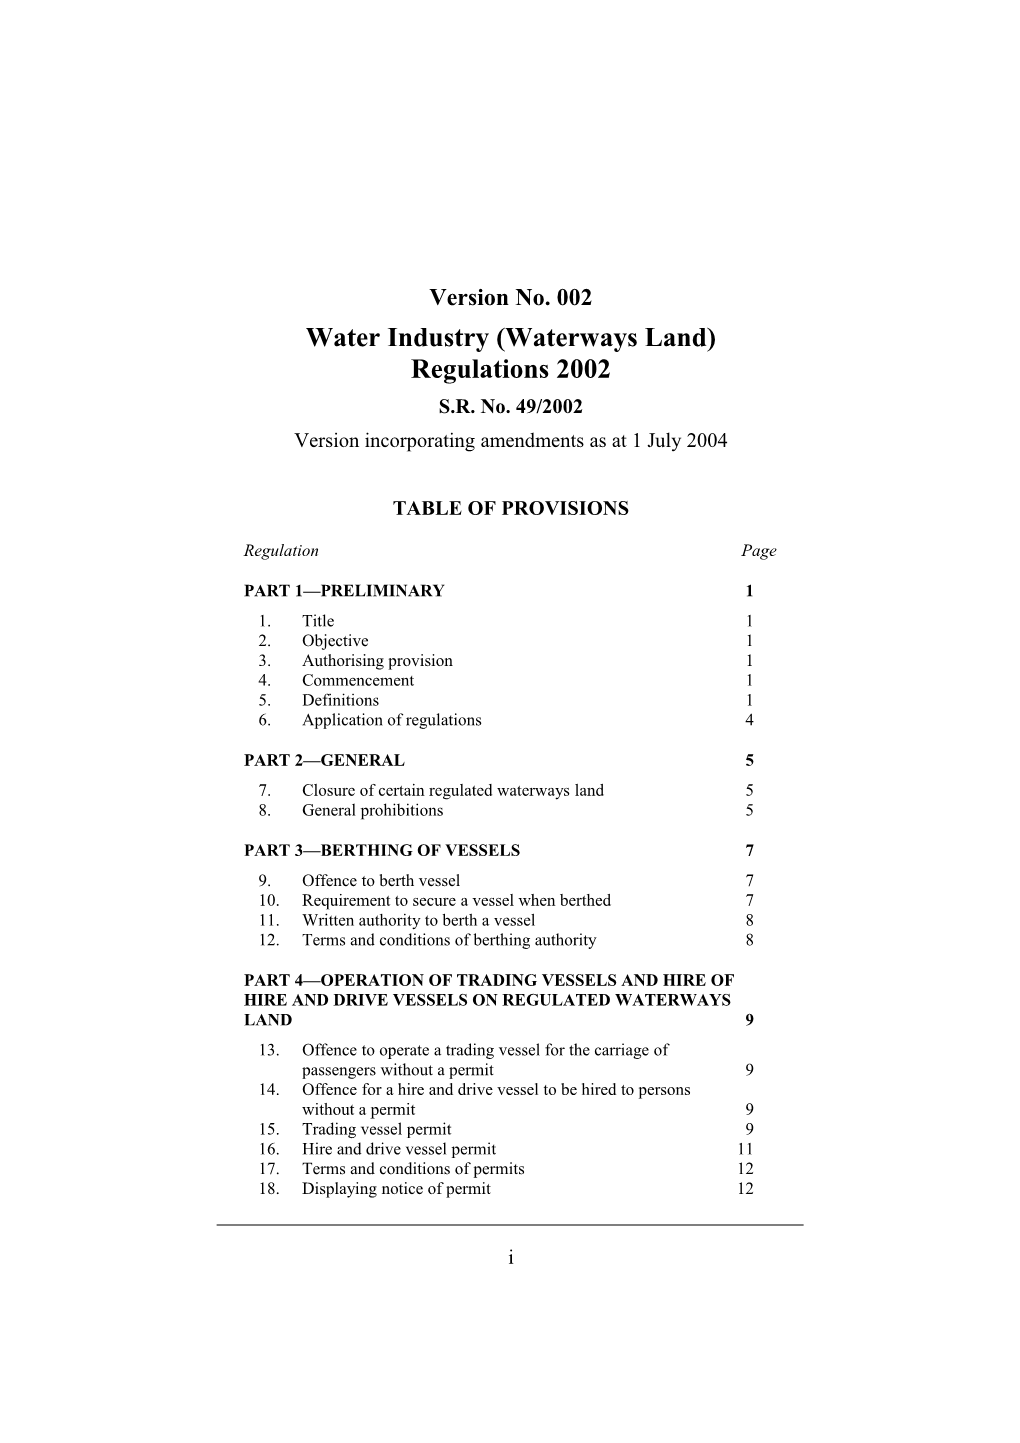 Water Industry (Waterways Land) Regulations 2002